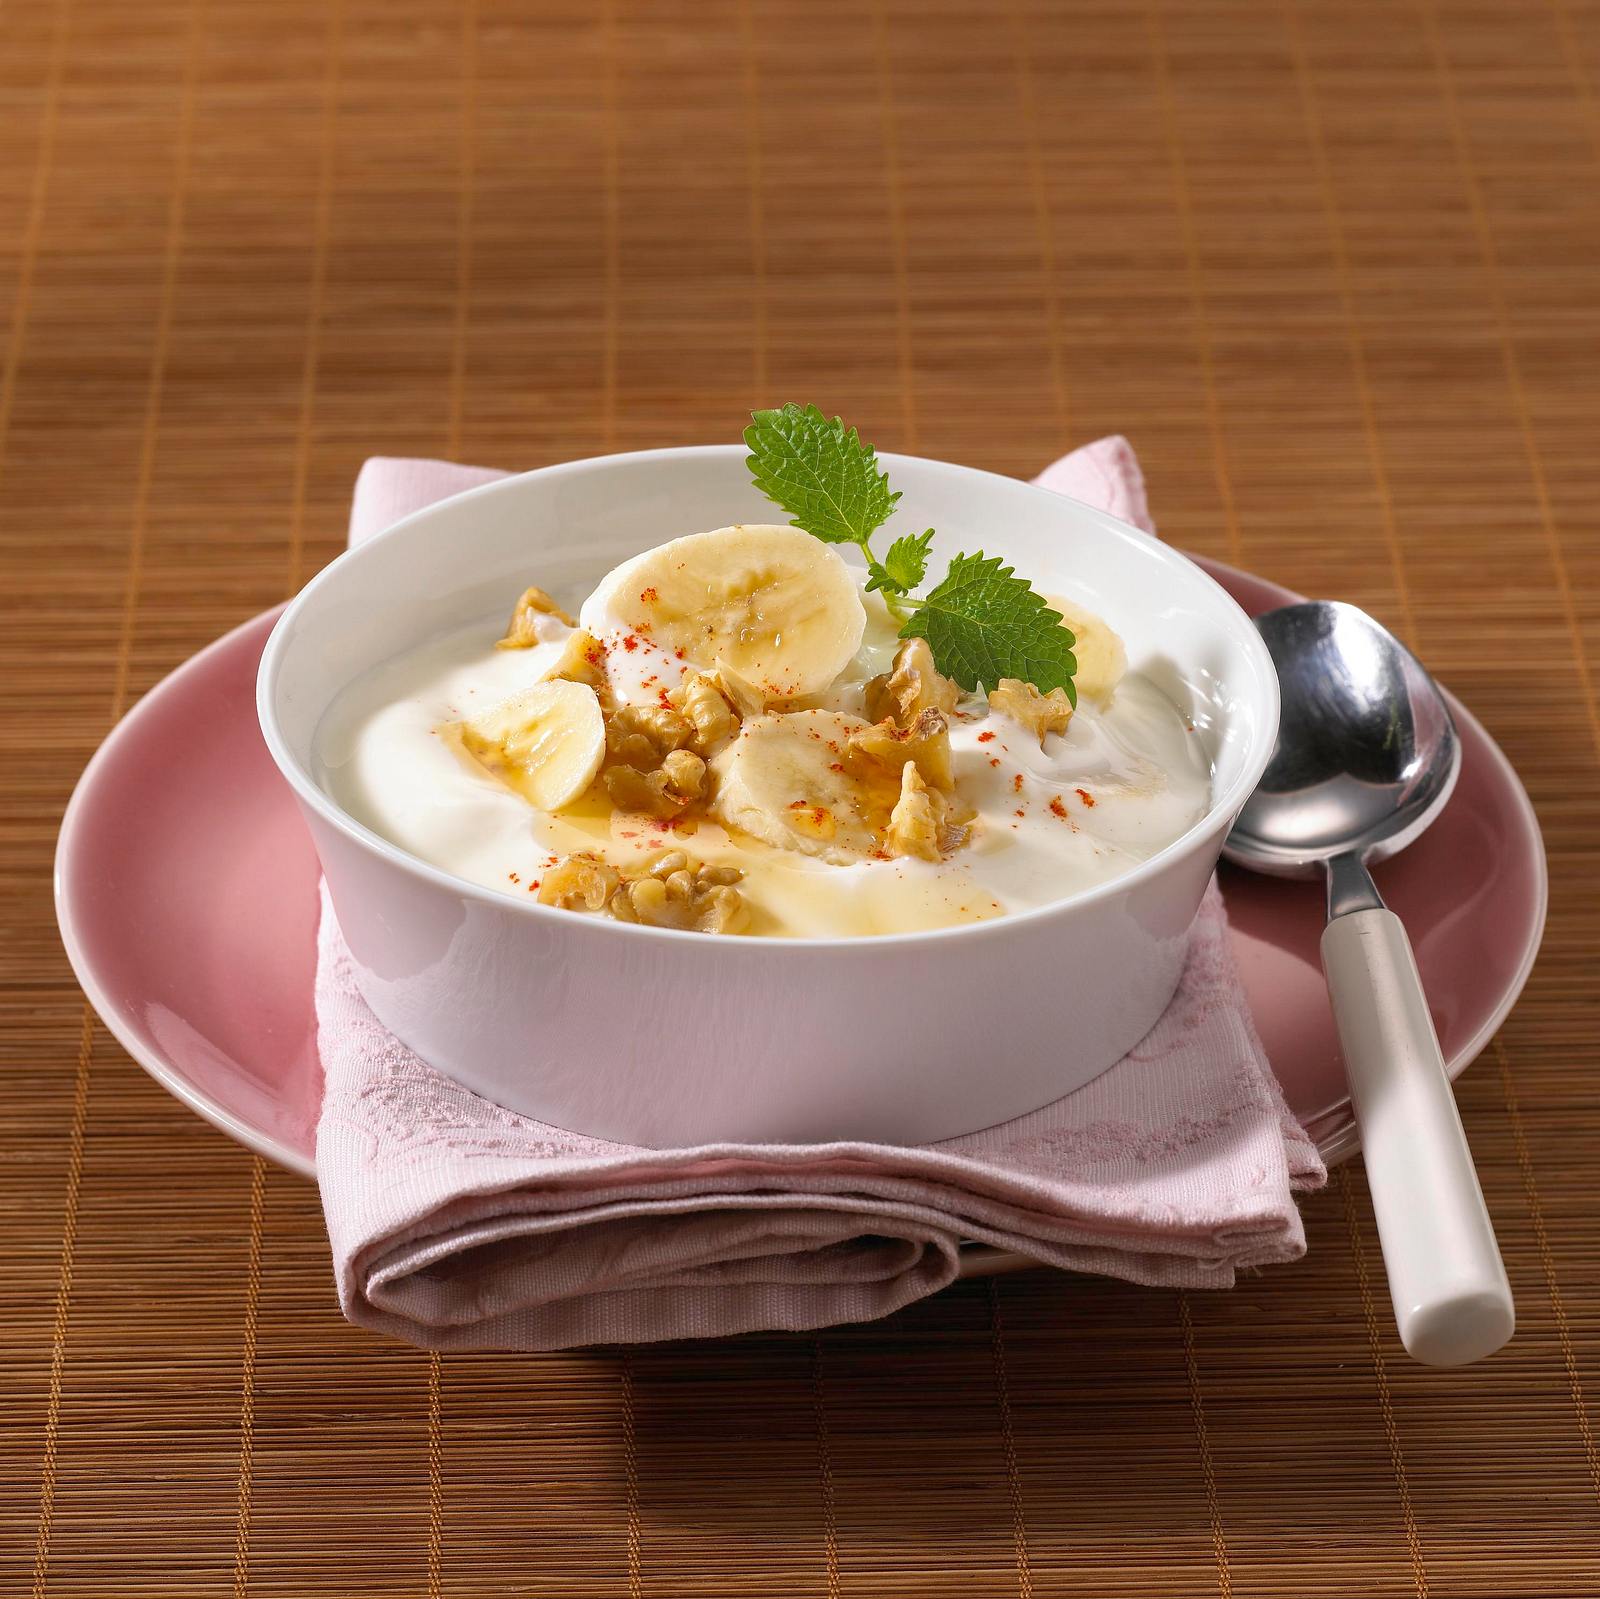 Bananen-Joghurt mit Walnüssen Rezept | LECKER